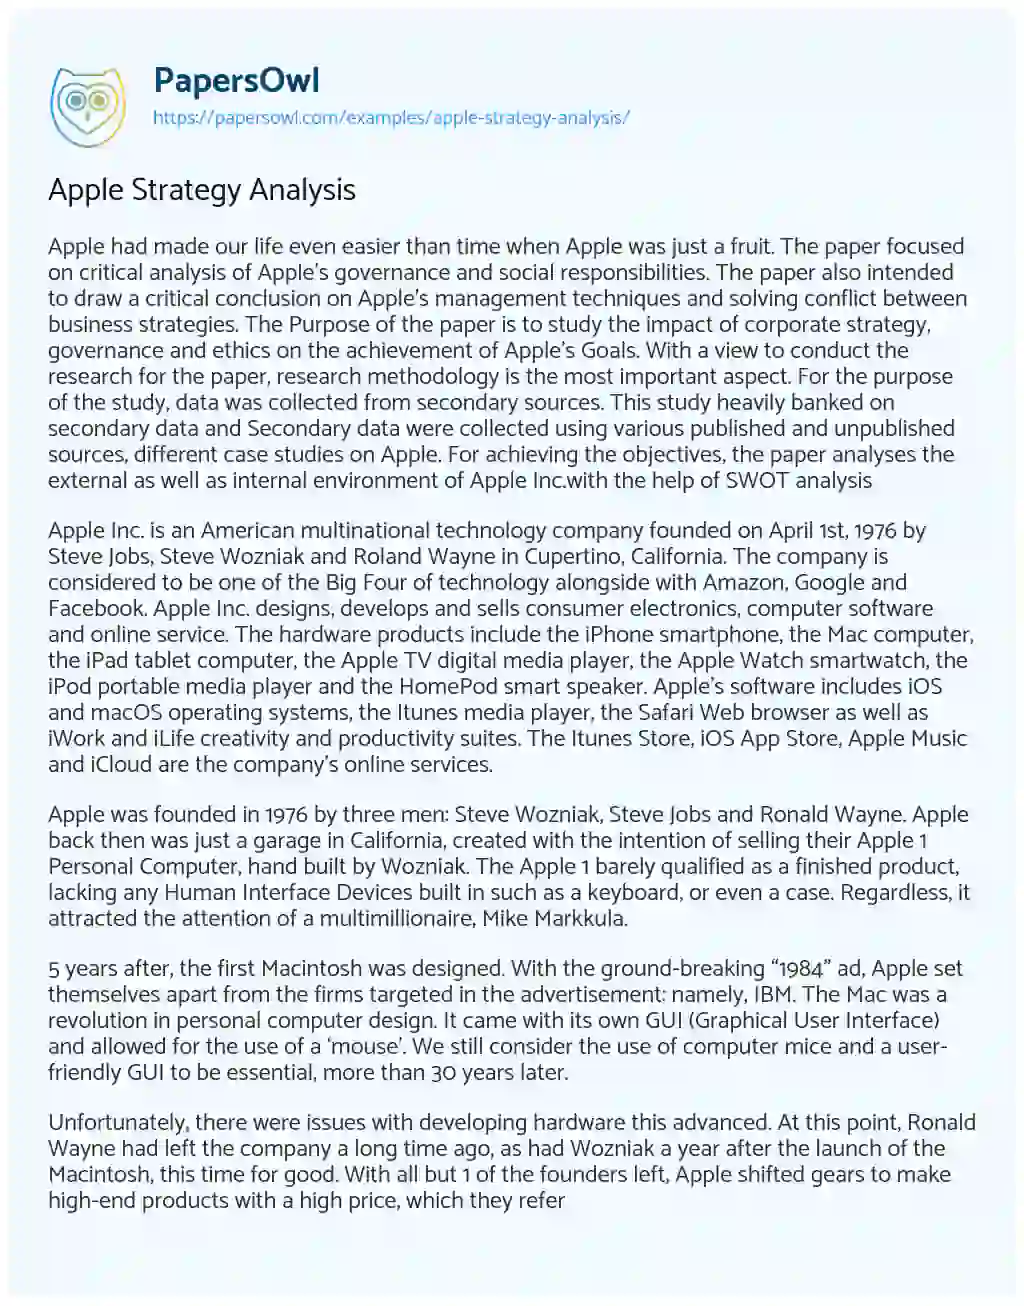 Essay on Apple Strategy Analysis